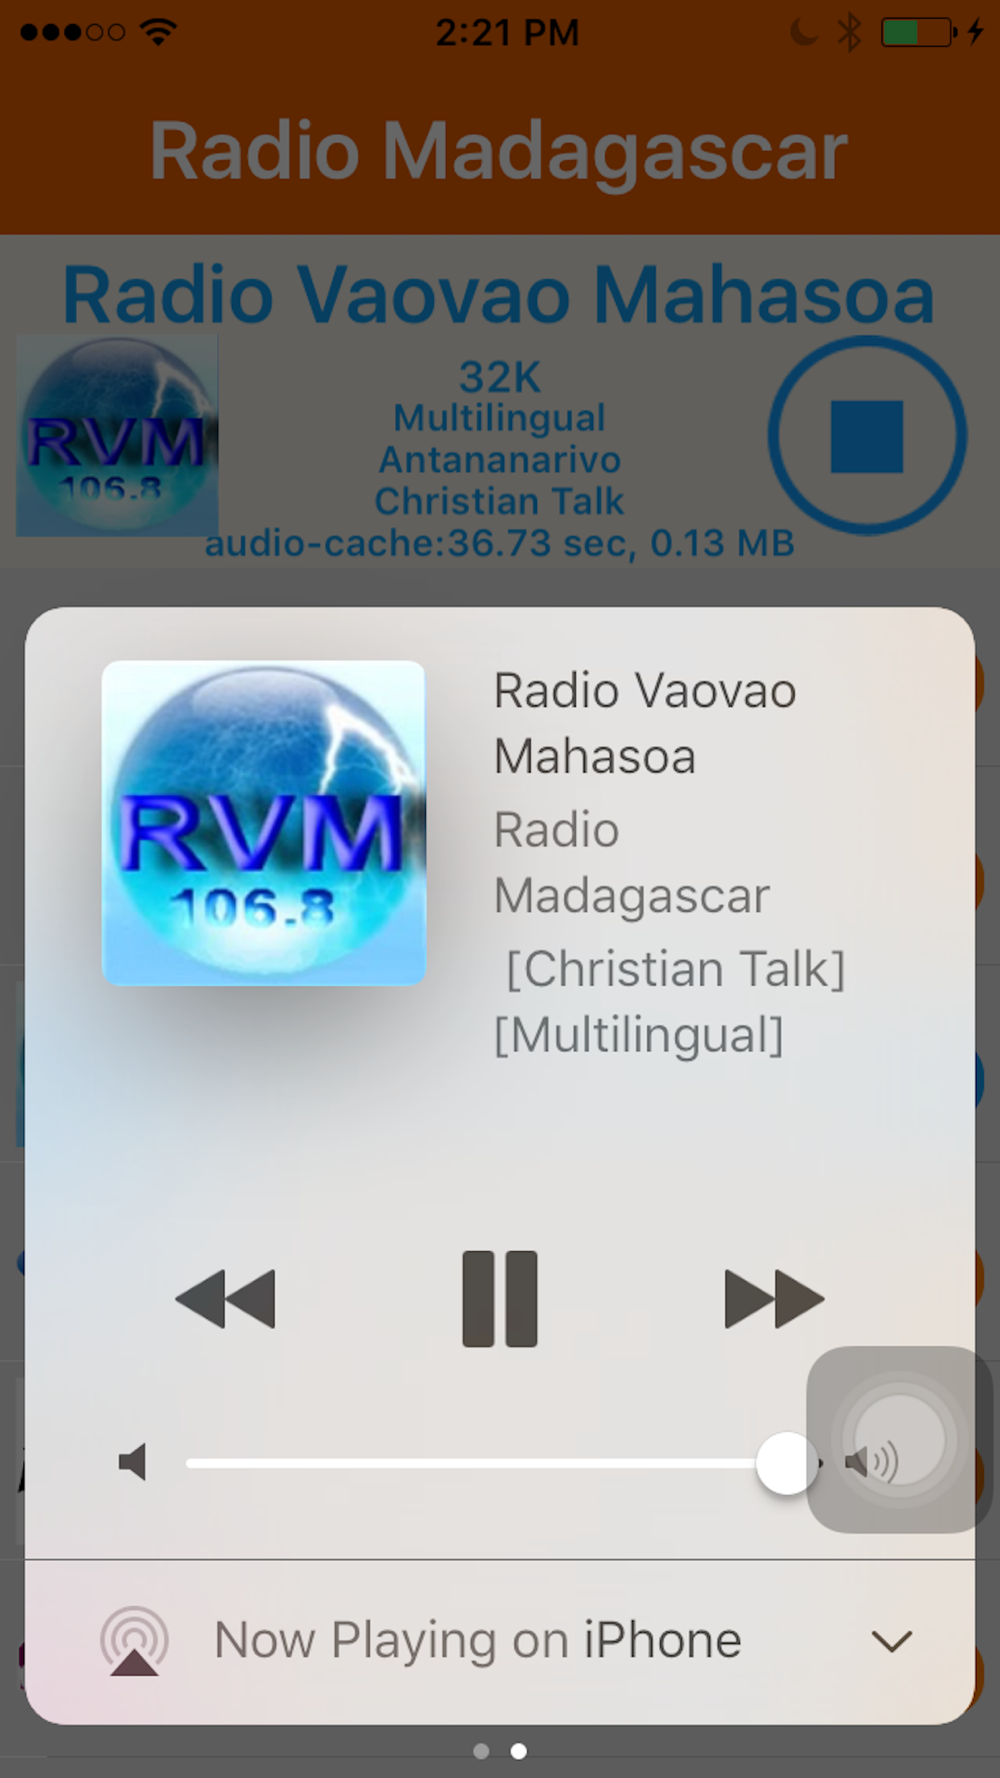 Radio Madagascar - Radio MG Free Download App for iPhone - STEPrimo.com